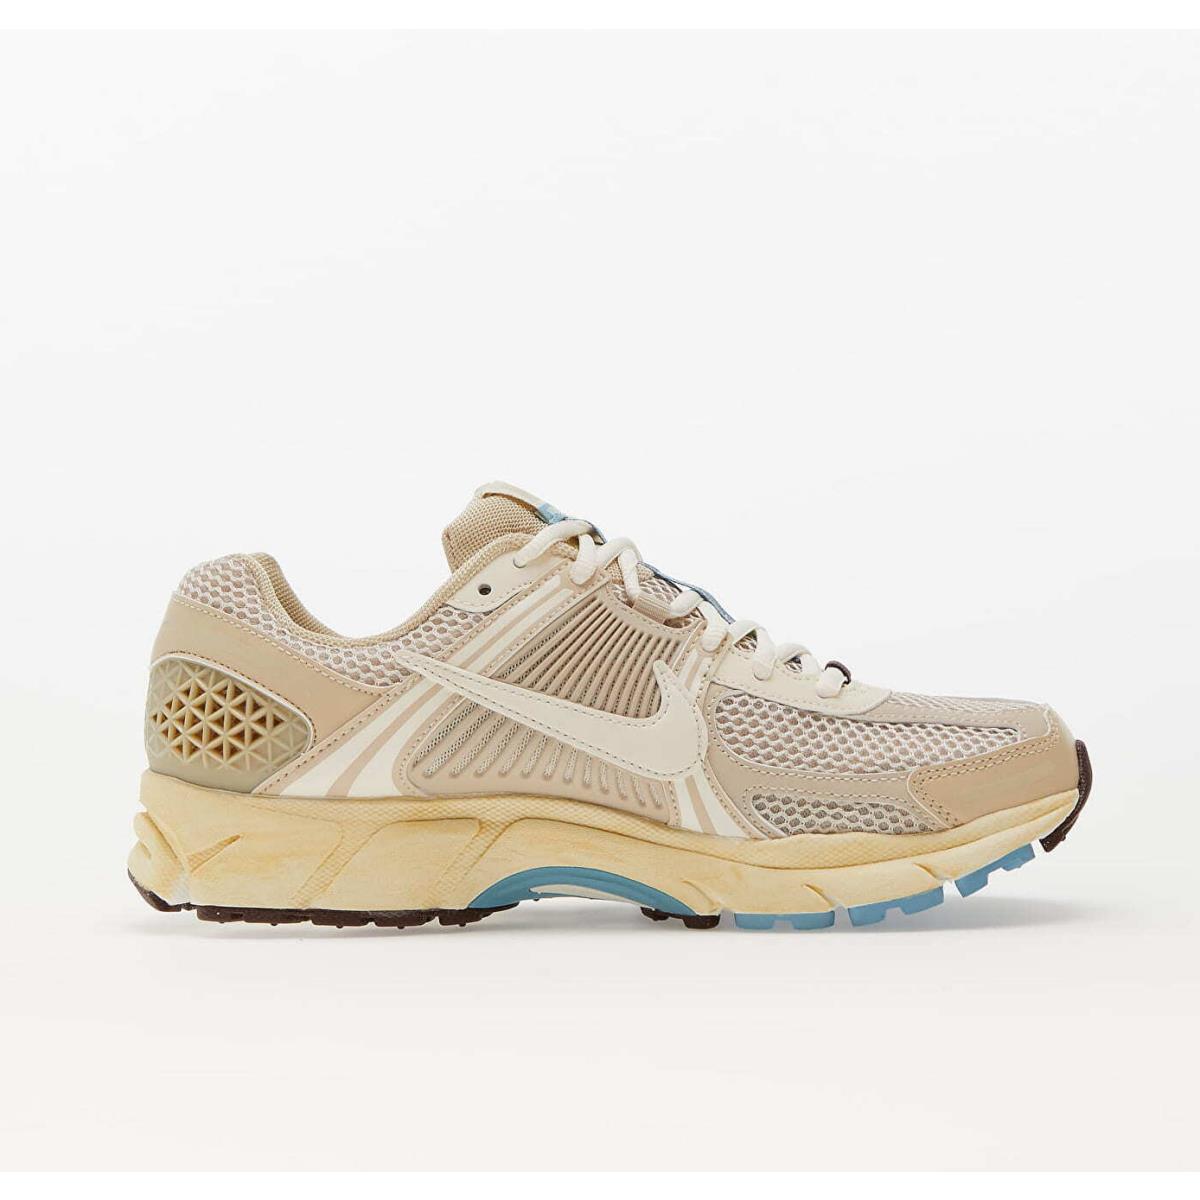 Nike shoes Zoom Vomero - Oatmeal/ Pale Ivory-Sail-Lt Chocolate 2